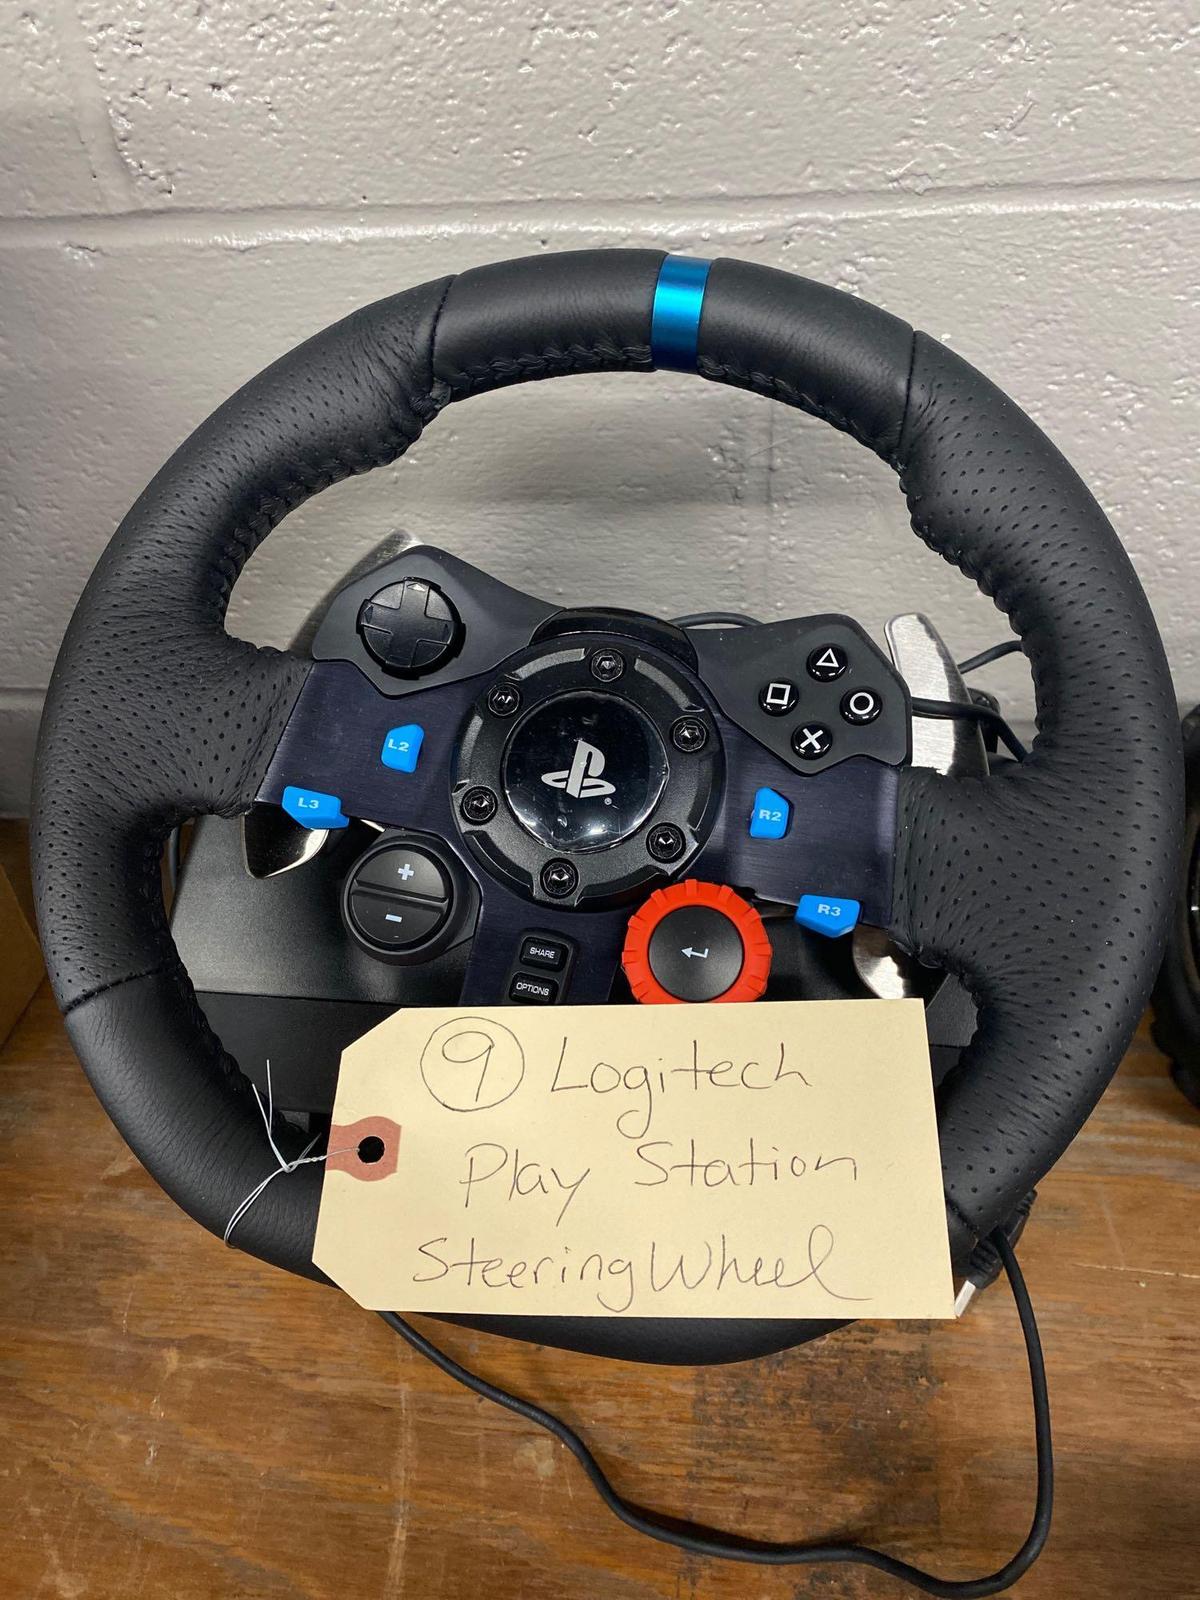 Logitech play station steering wheel